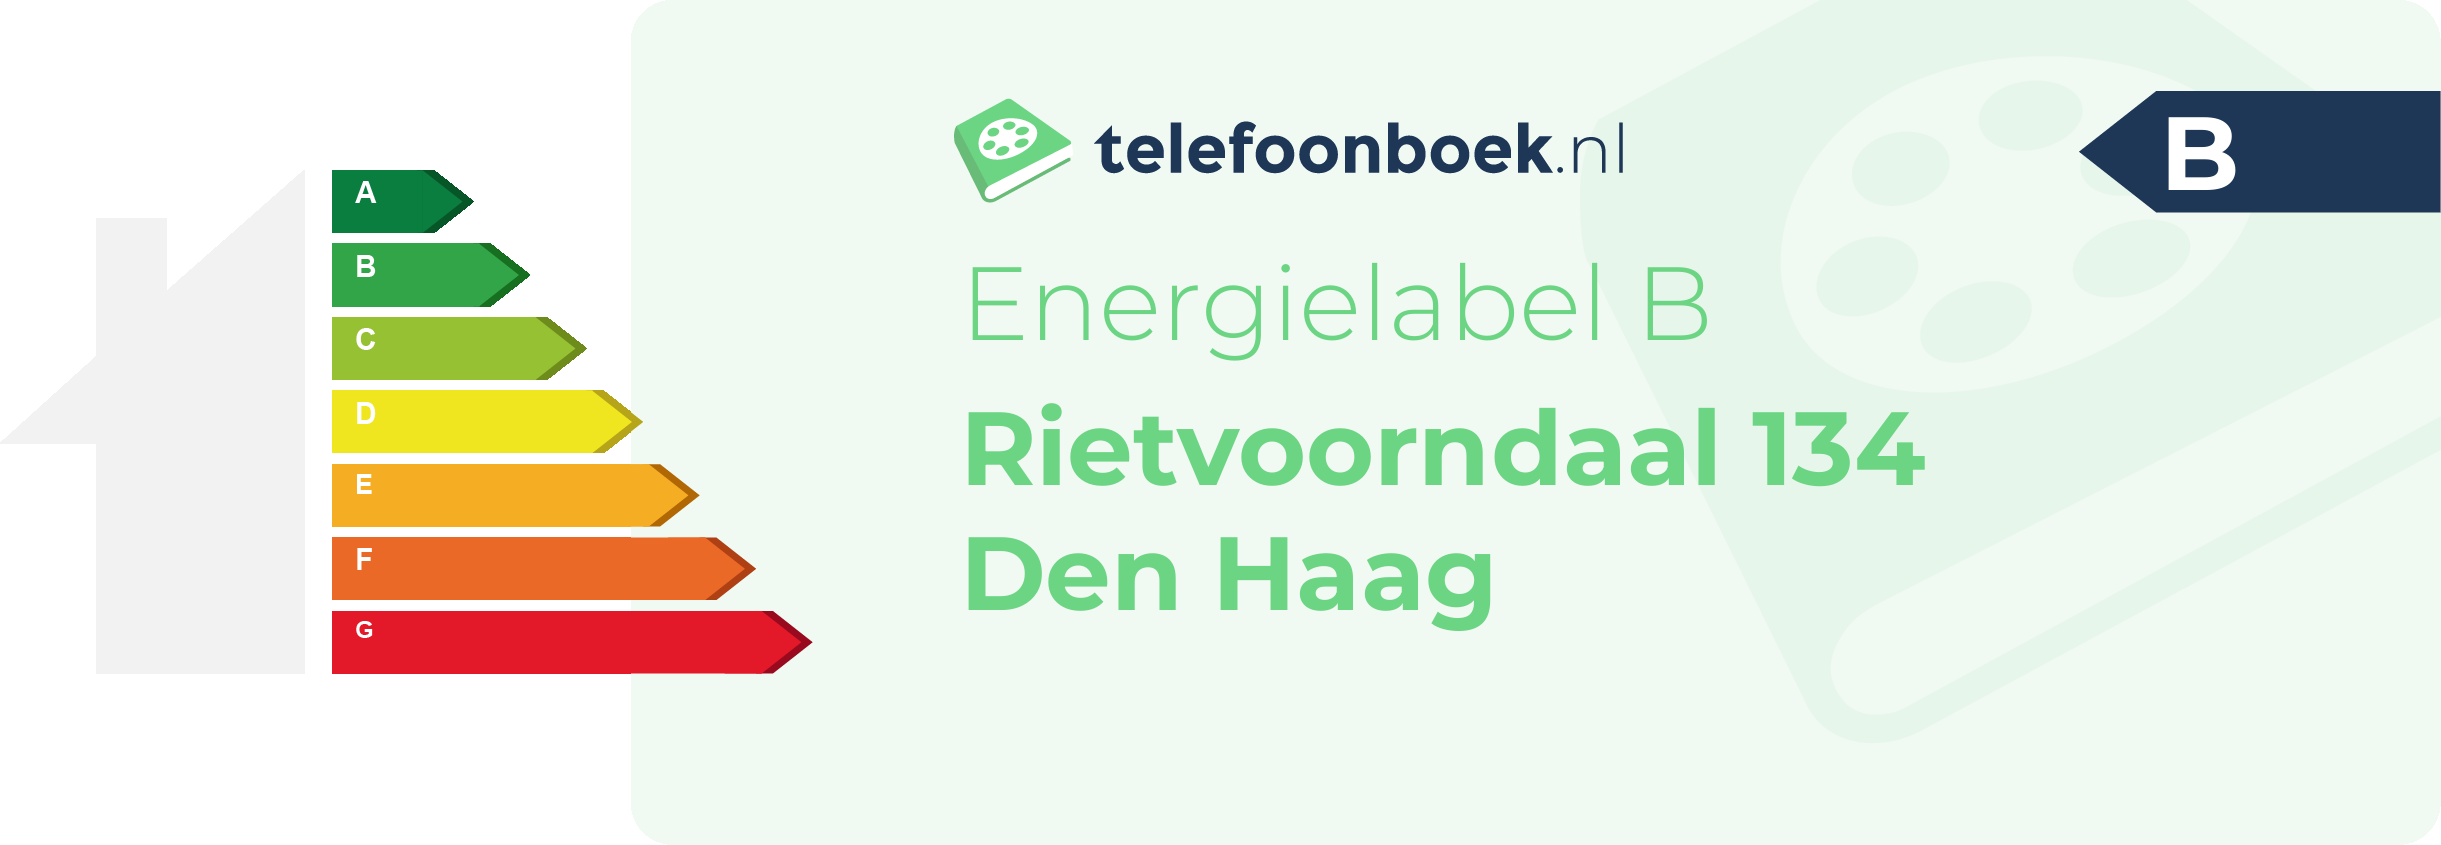 Energielabel Rietvoorndaal 134 Den Haag